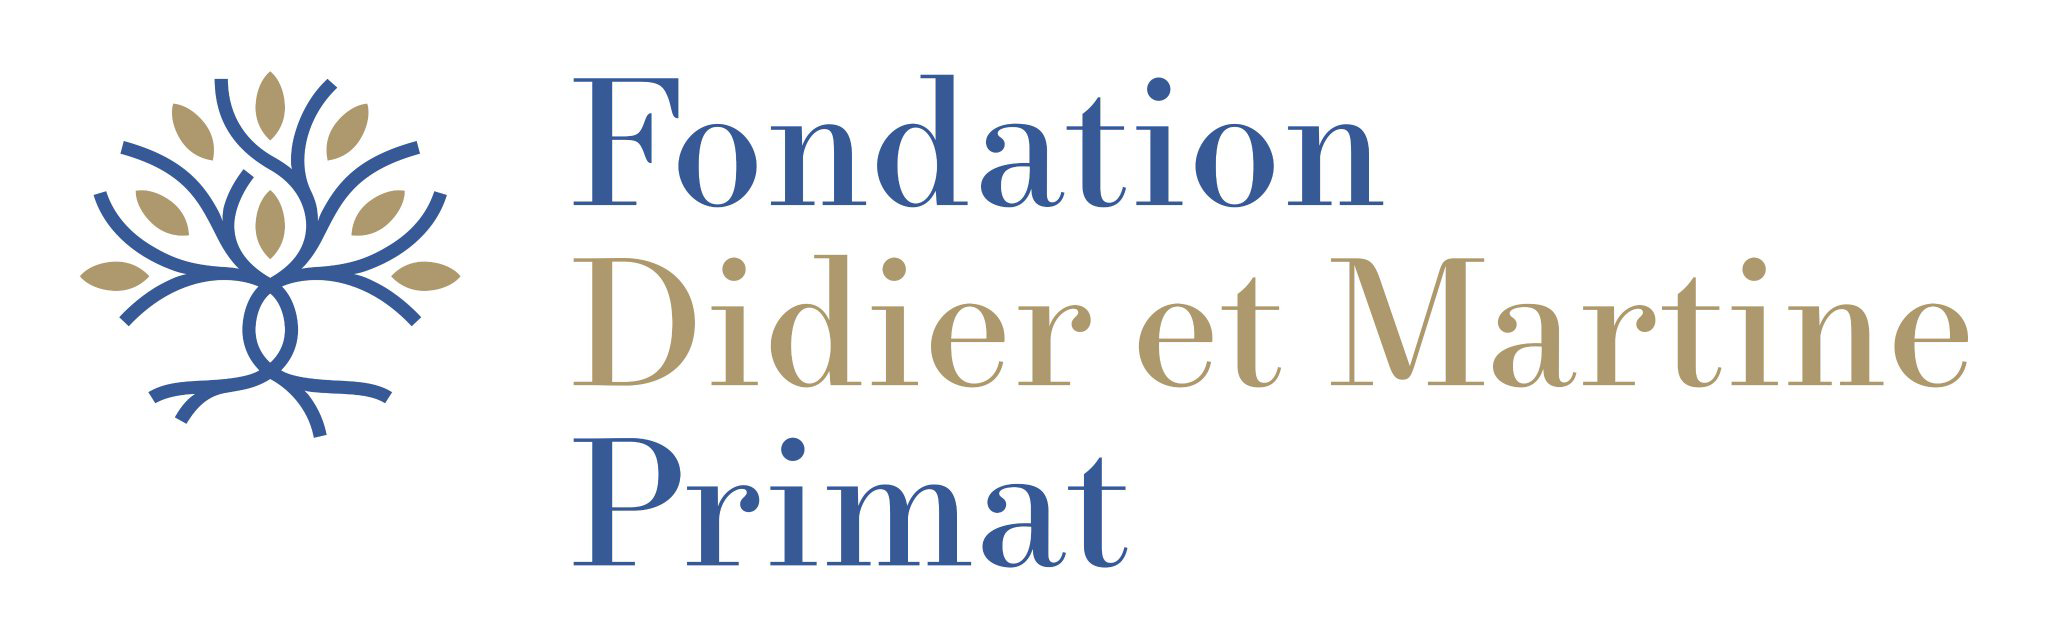 Primat Logo New